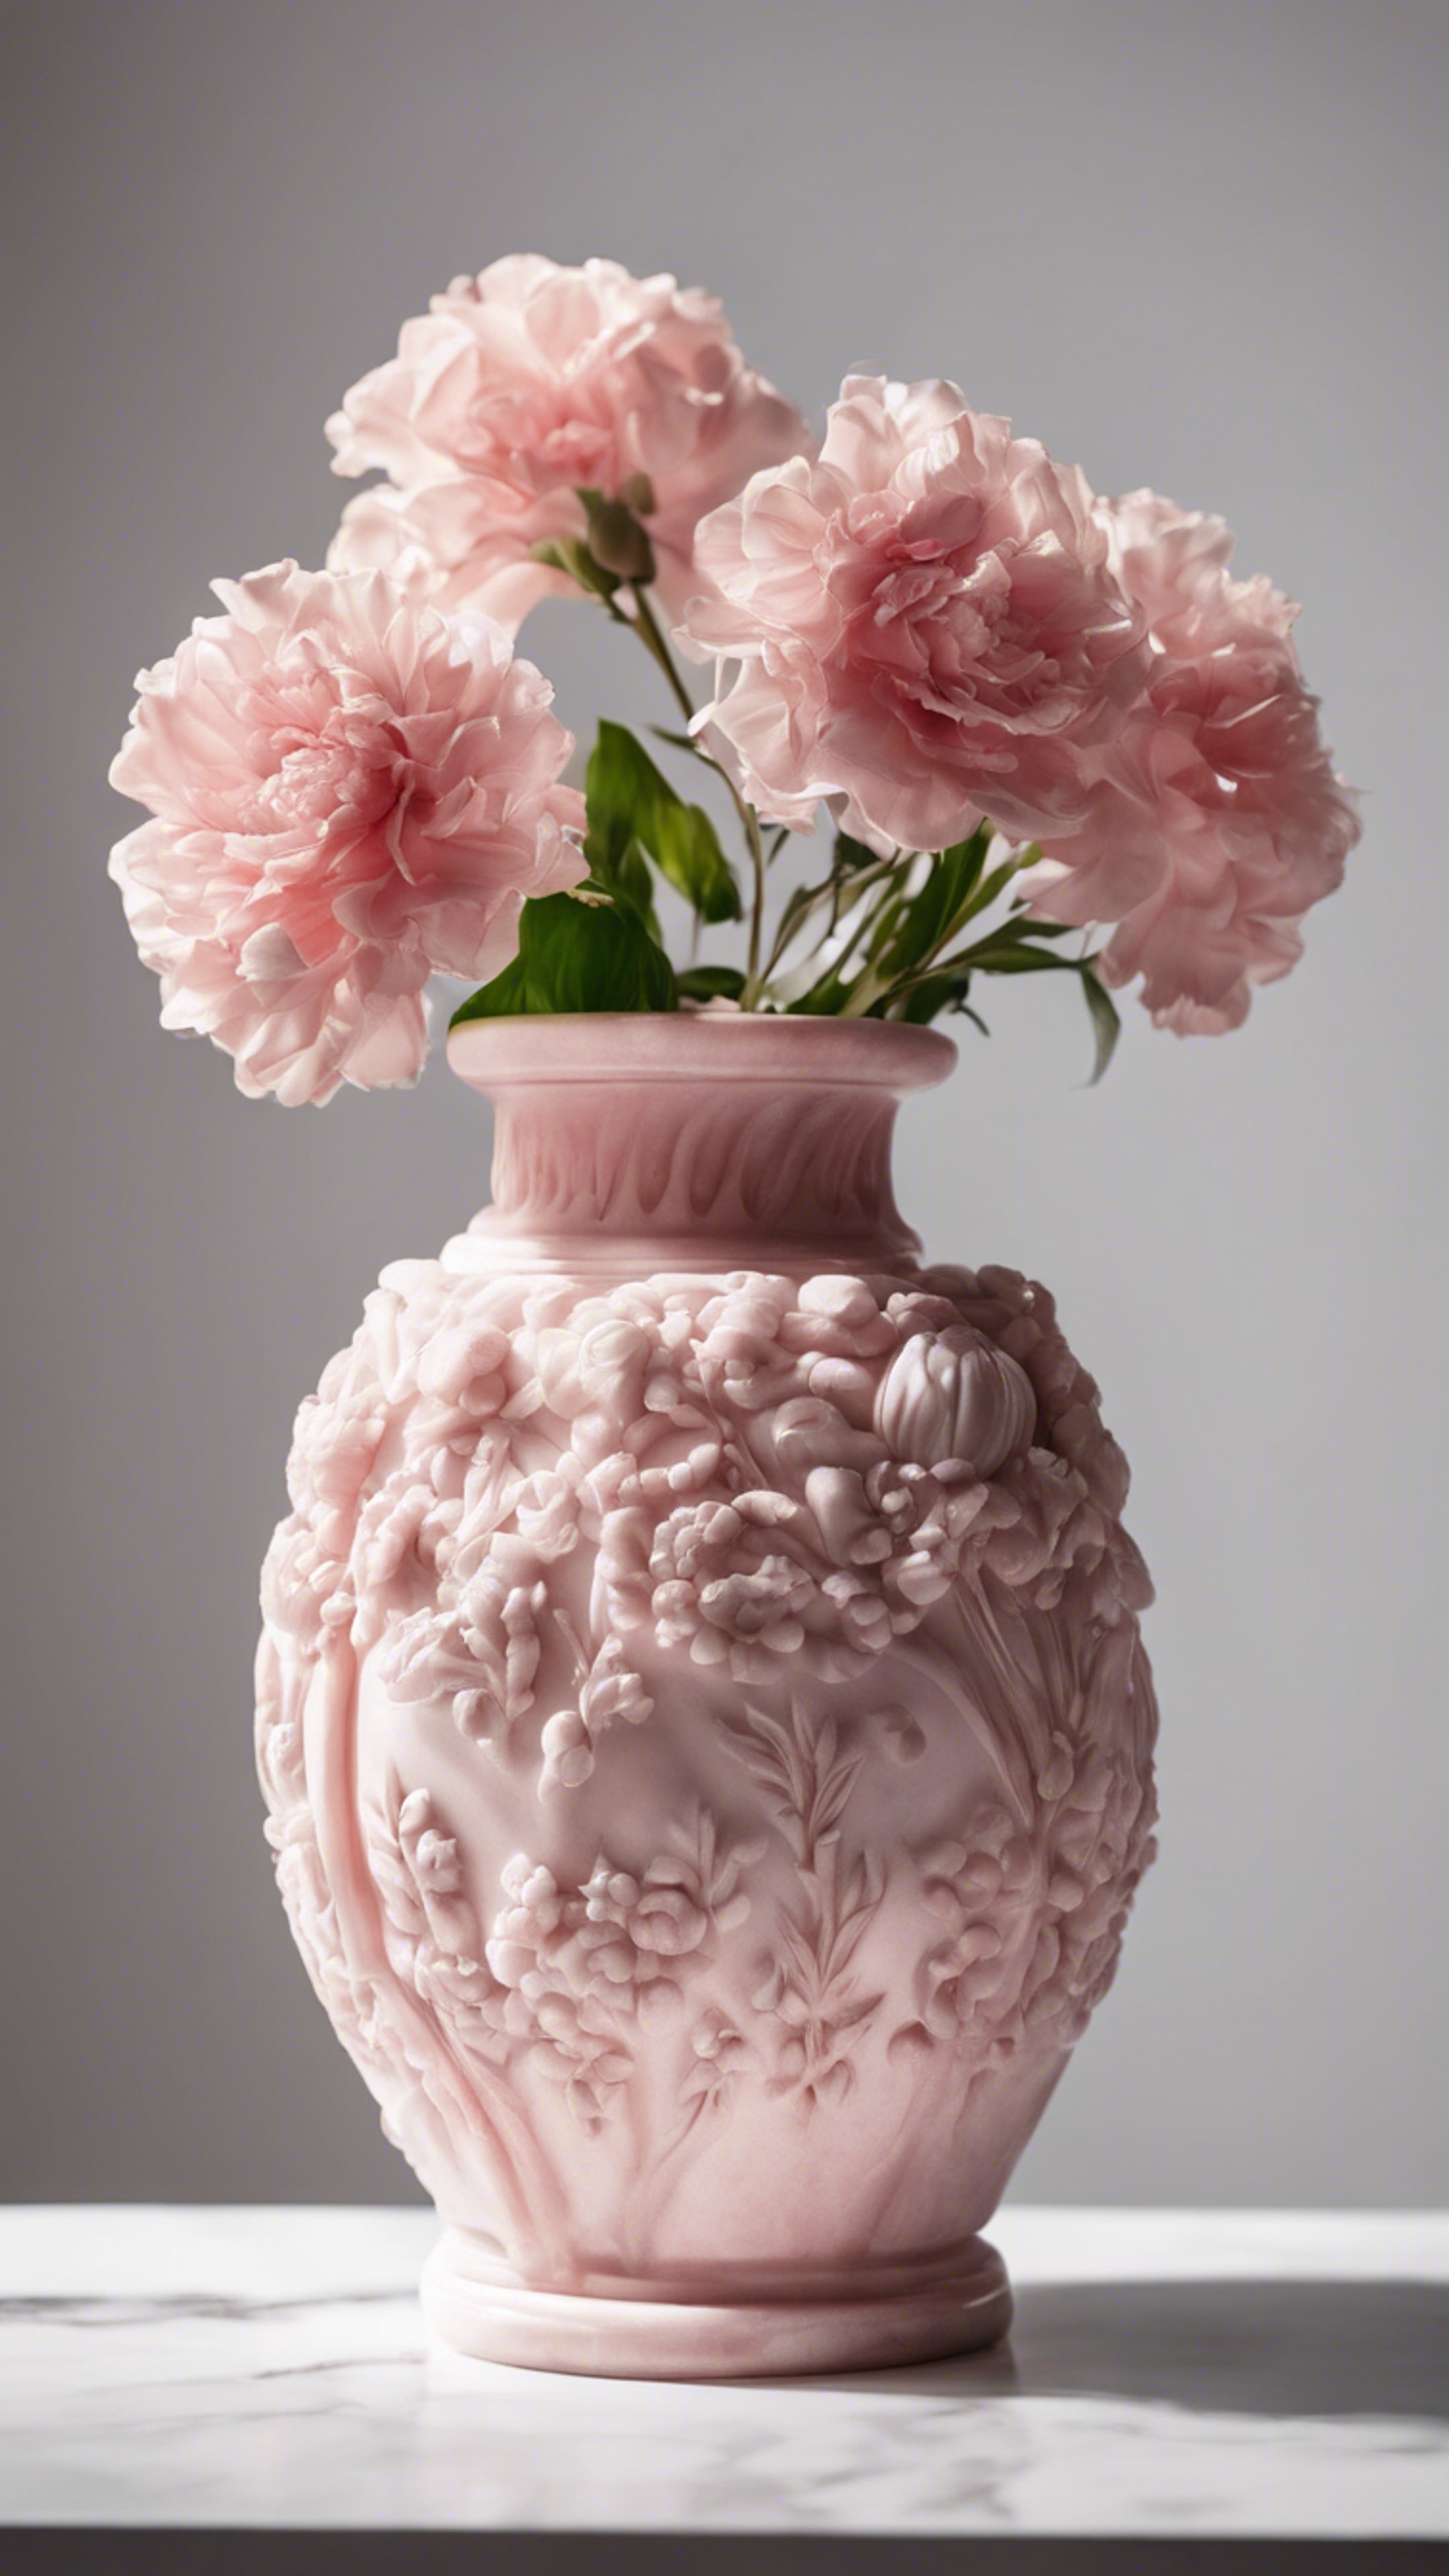 Elegantly carved pink marble flower vase against a white background. 벽지[b14a0bd2340d44aeb9d9]